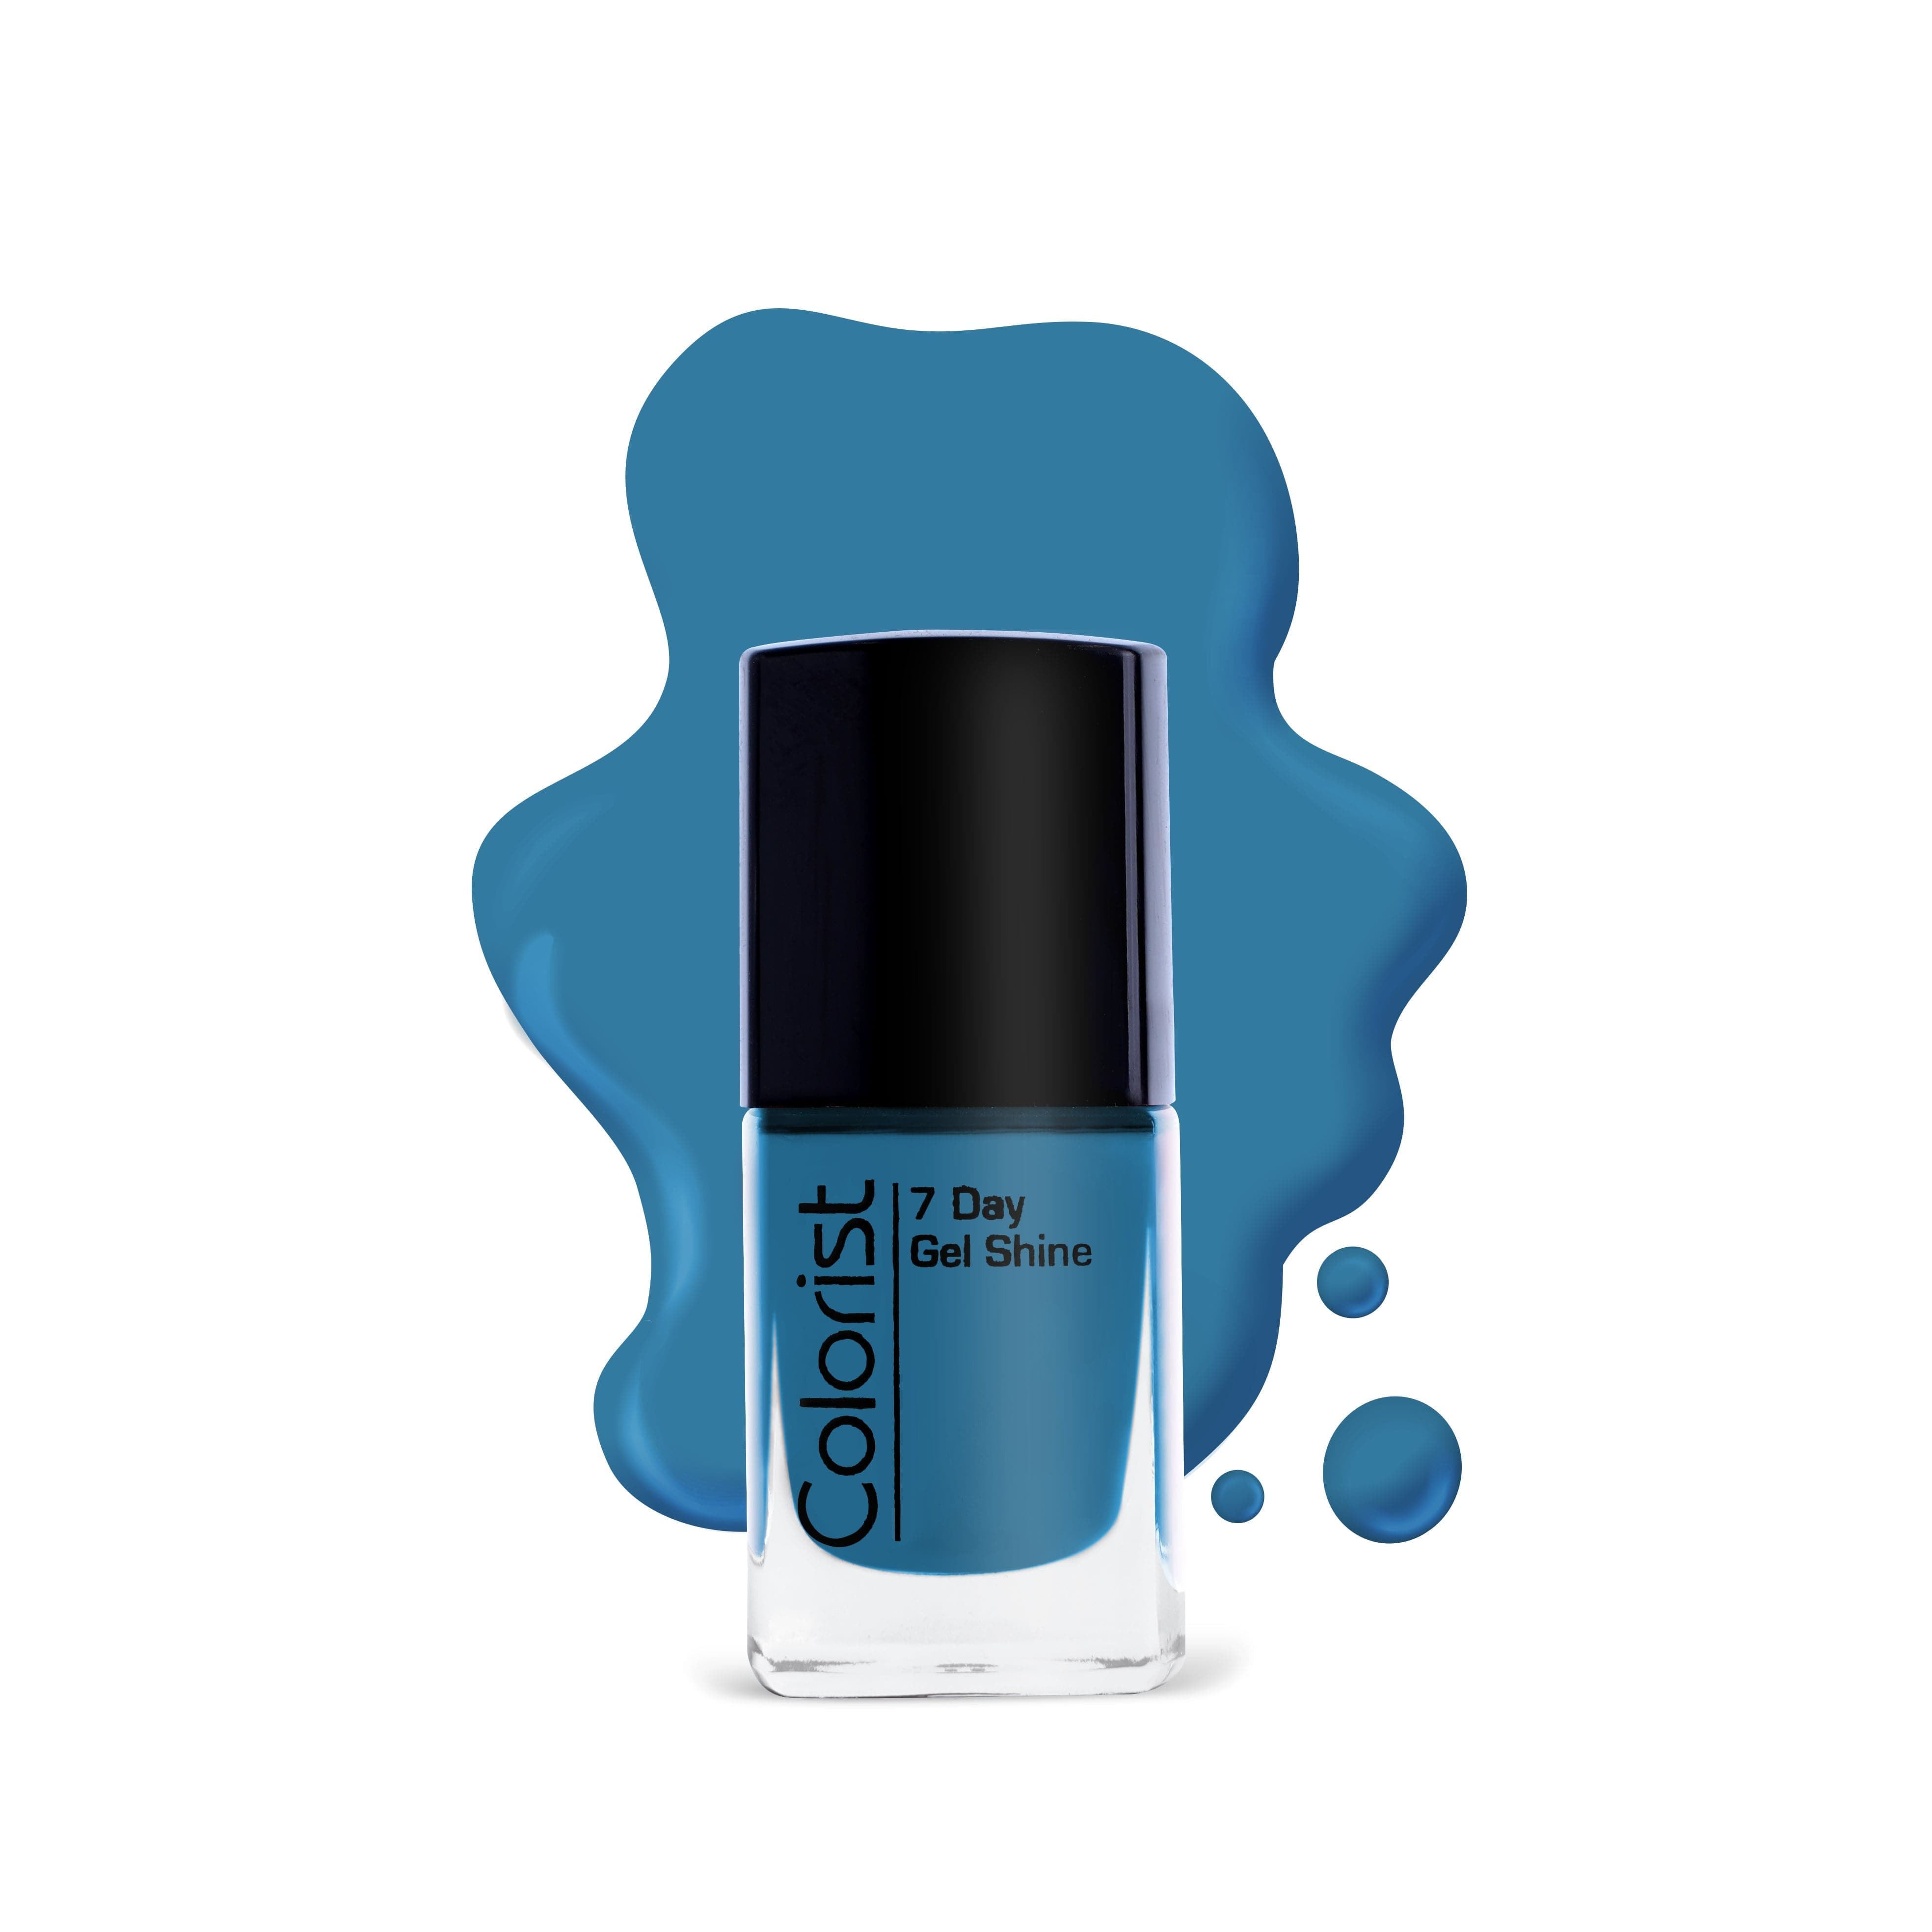 ST London Colorist Nail Paint - St067 True Blue - Premium Health & Beauty from St London - Just Rs 330.00! Shop now at Cozmetica